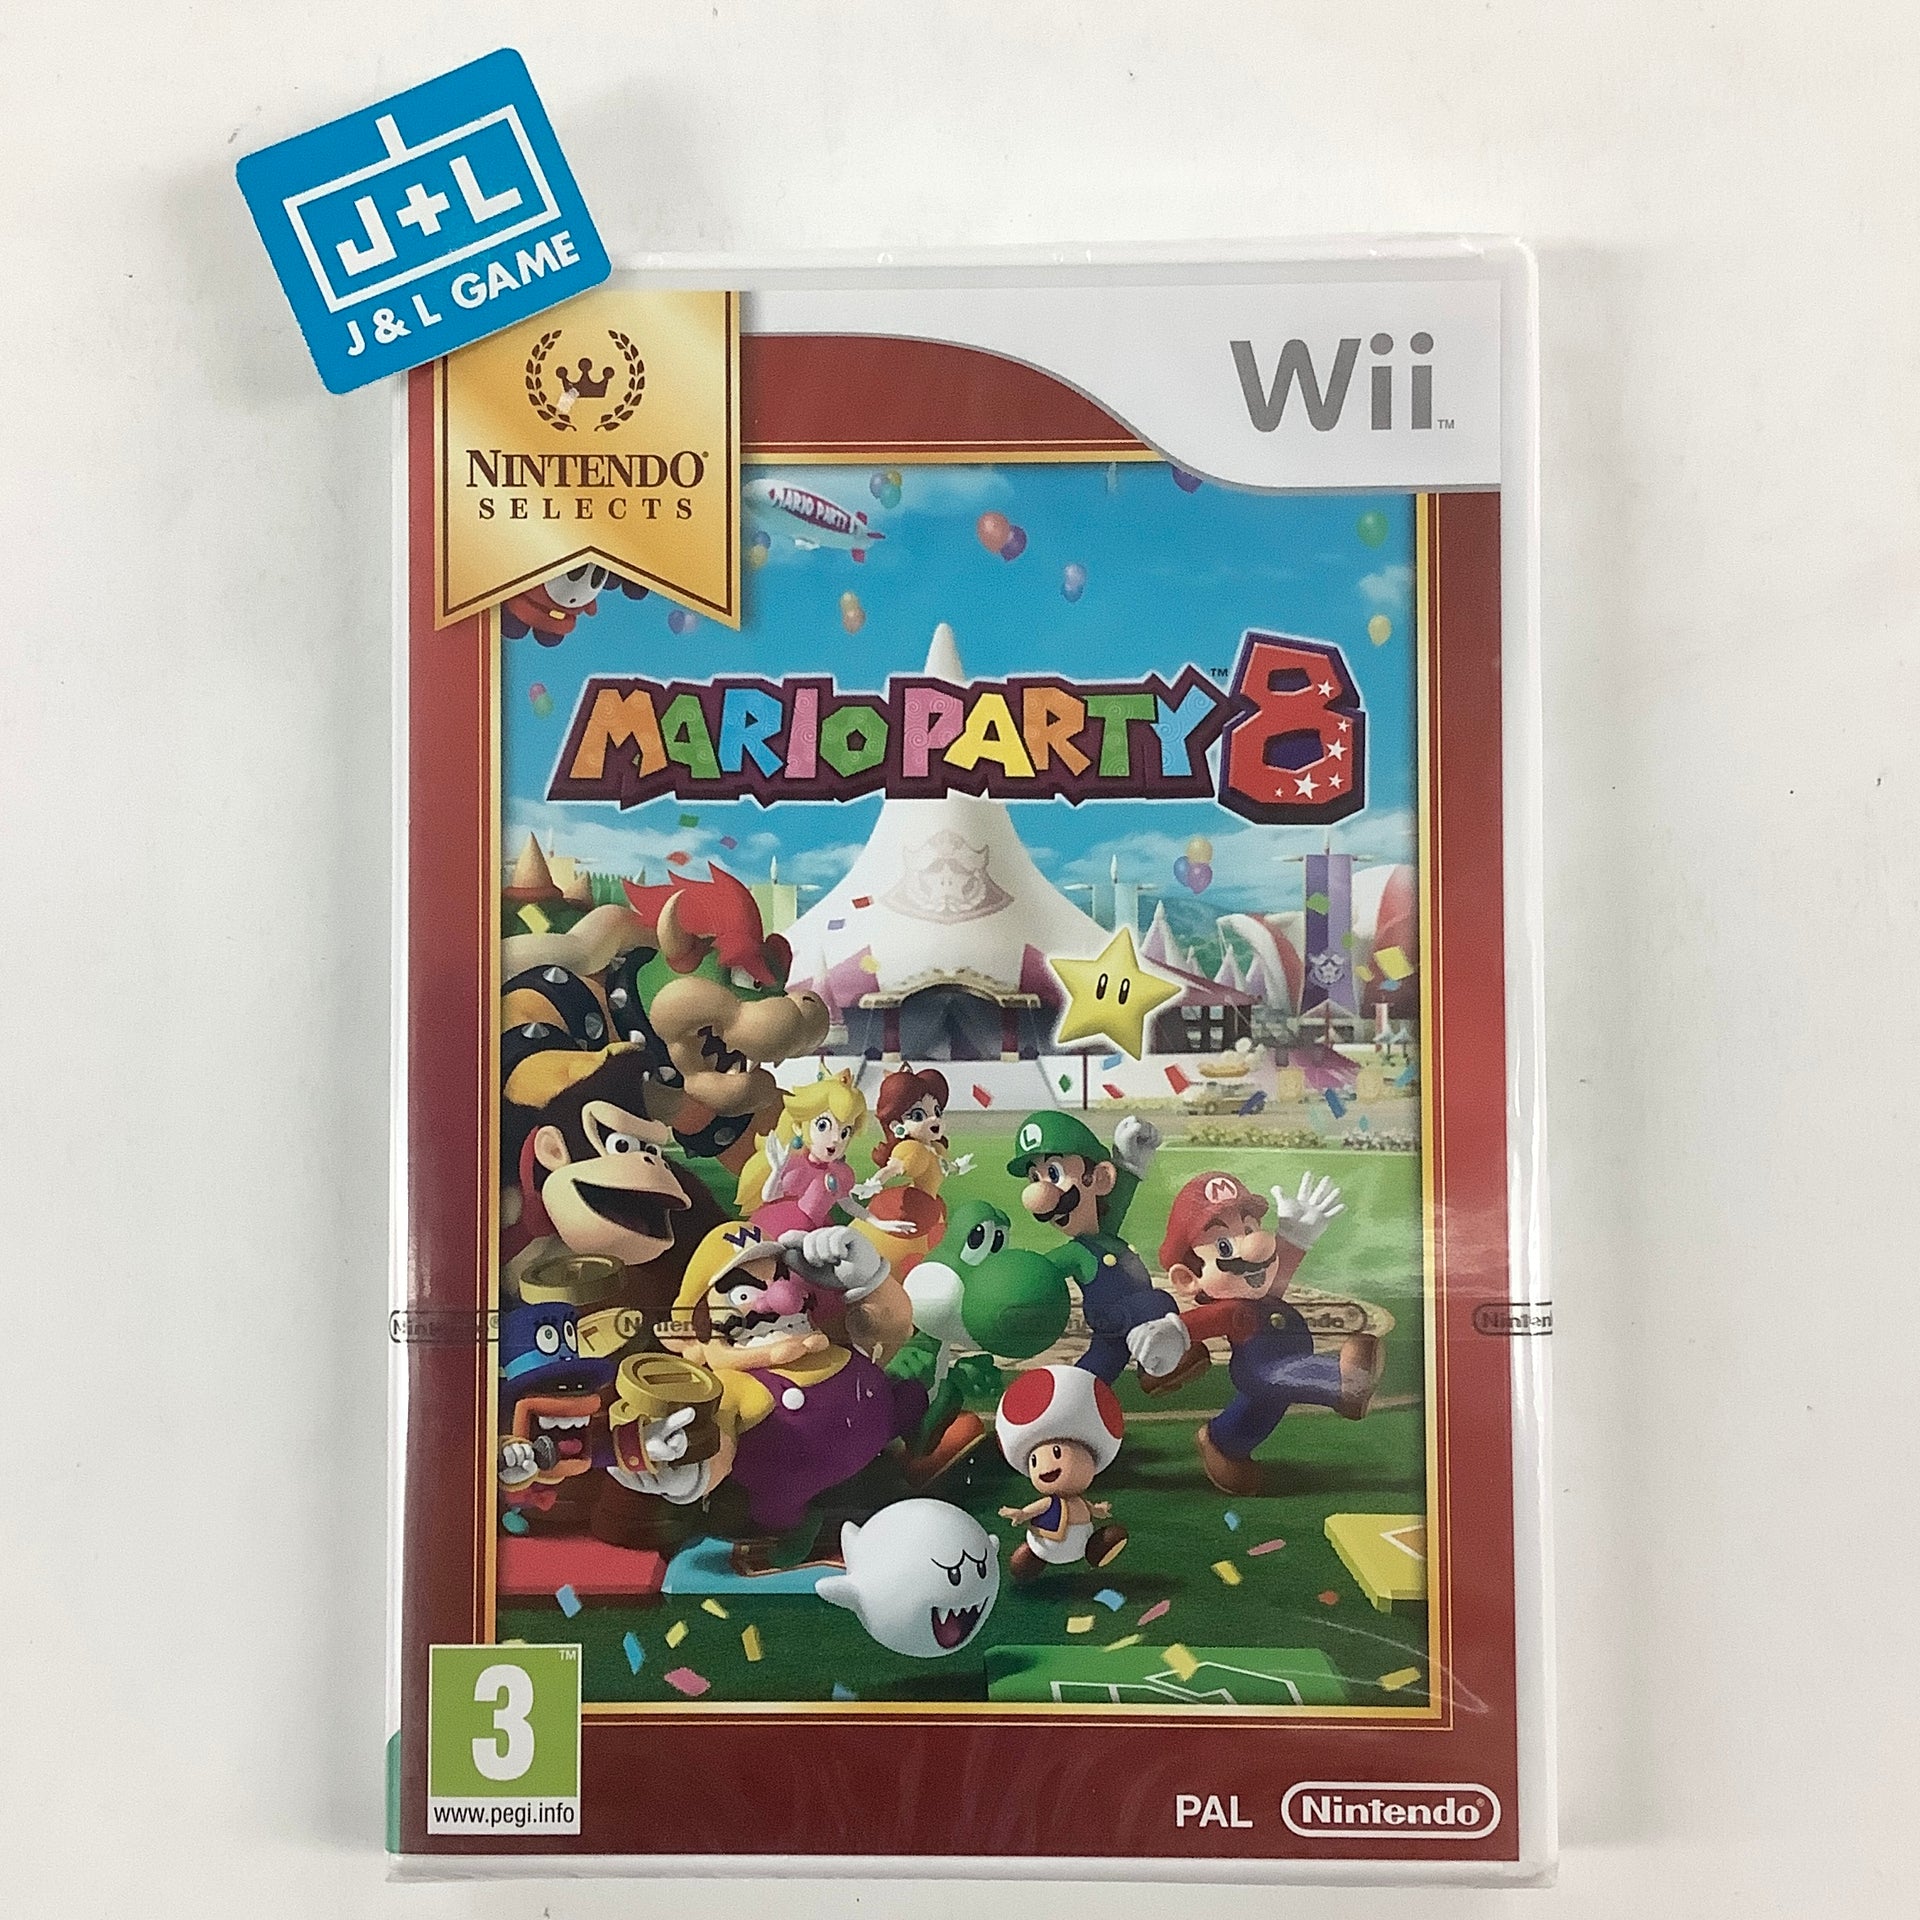 Mario Party 8 - Nintendo Wii (European Import)